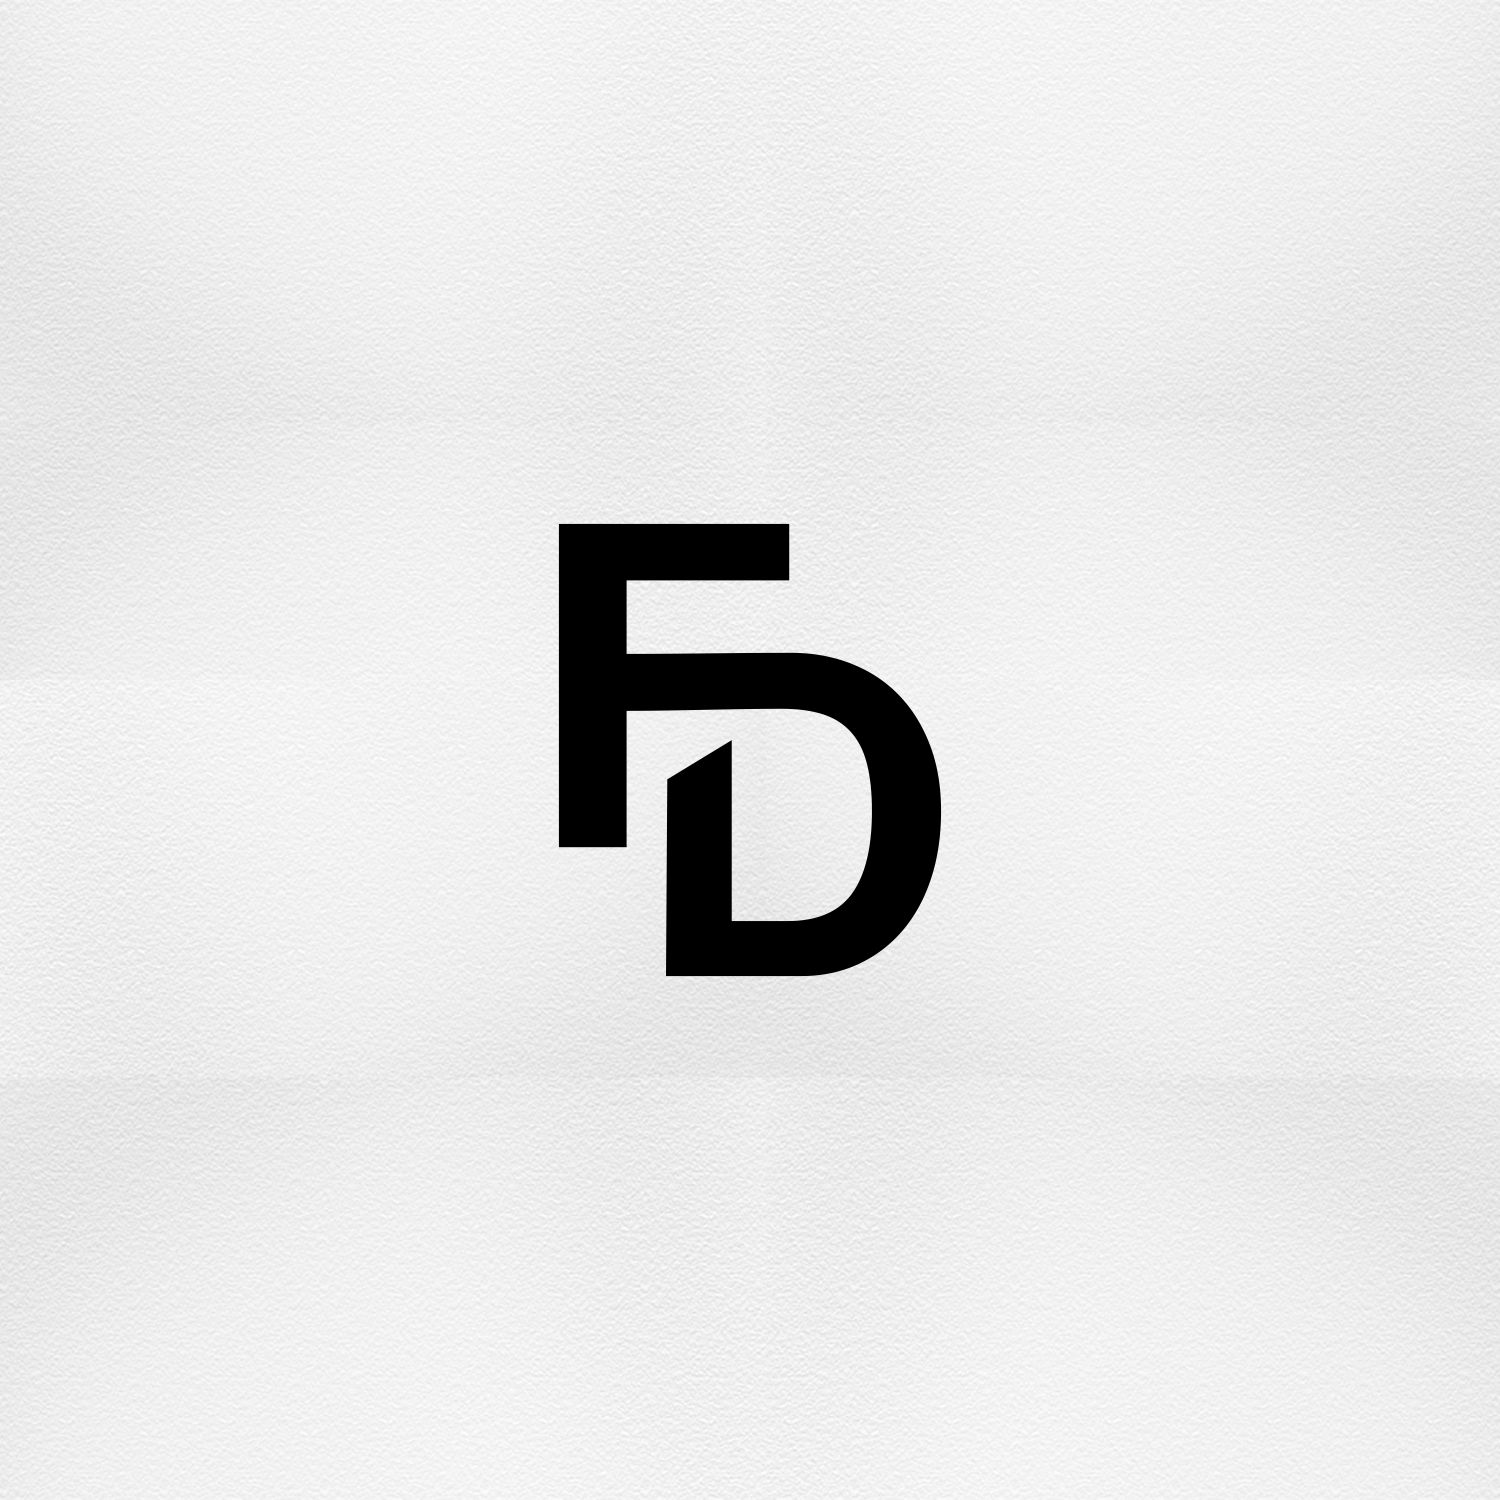 Спои б. Буква а логотип. Буква б логотип. Логотип из буквы б. Логотип d.